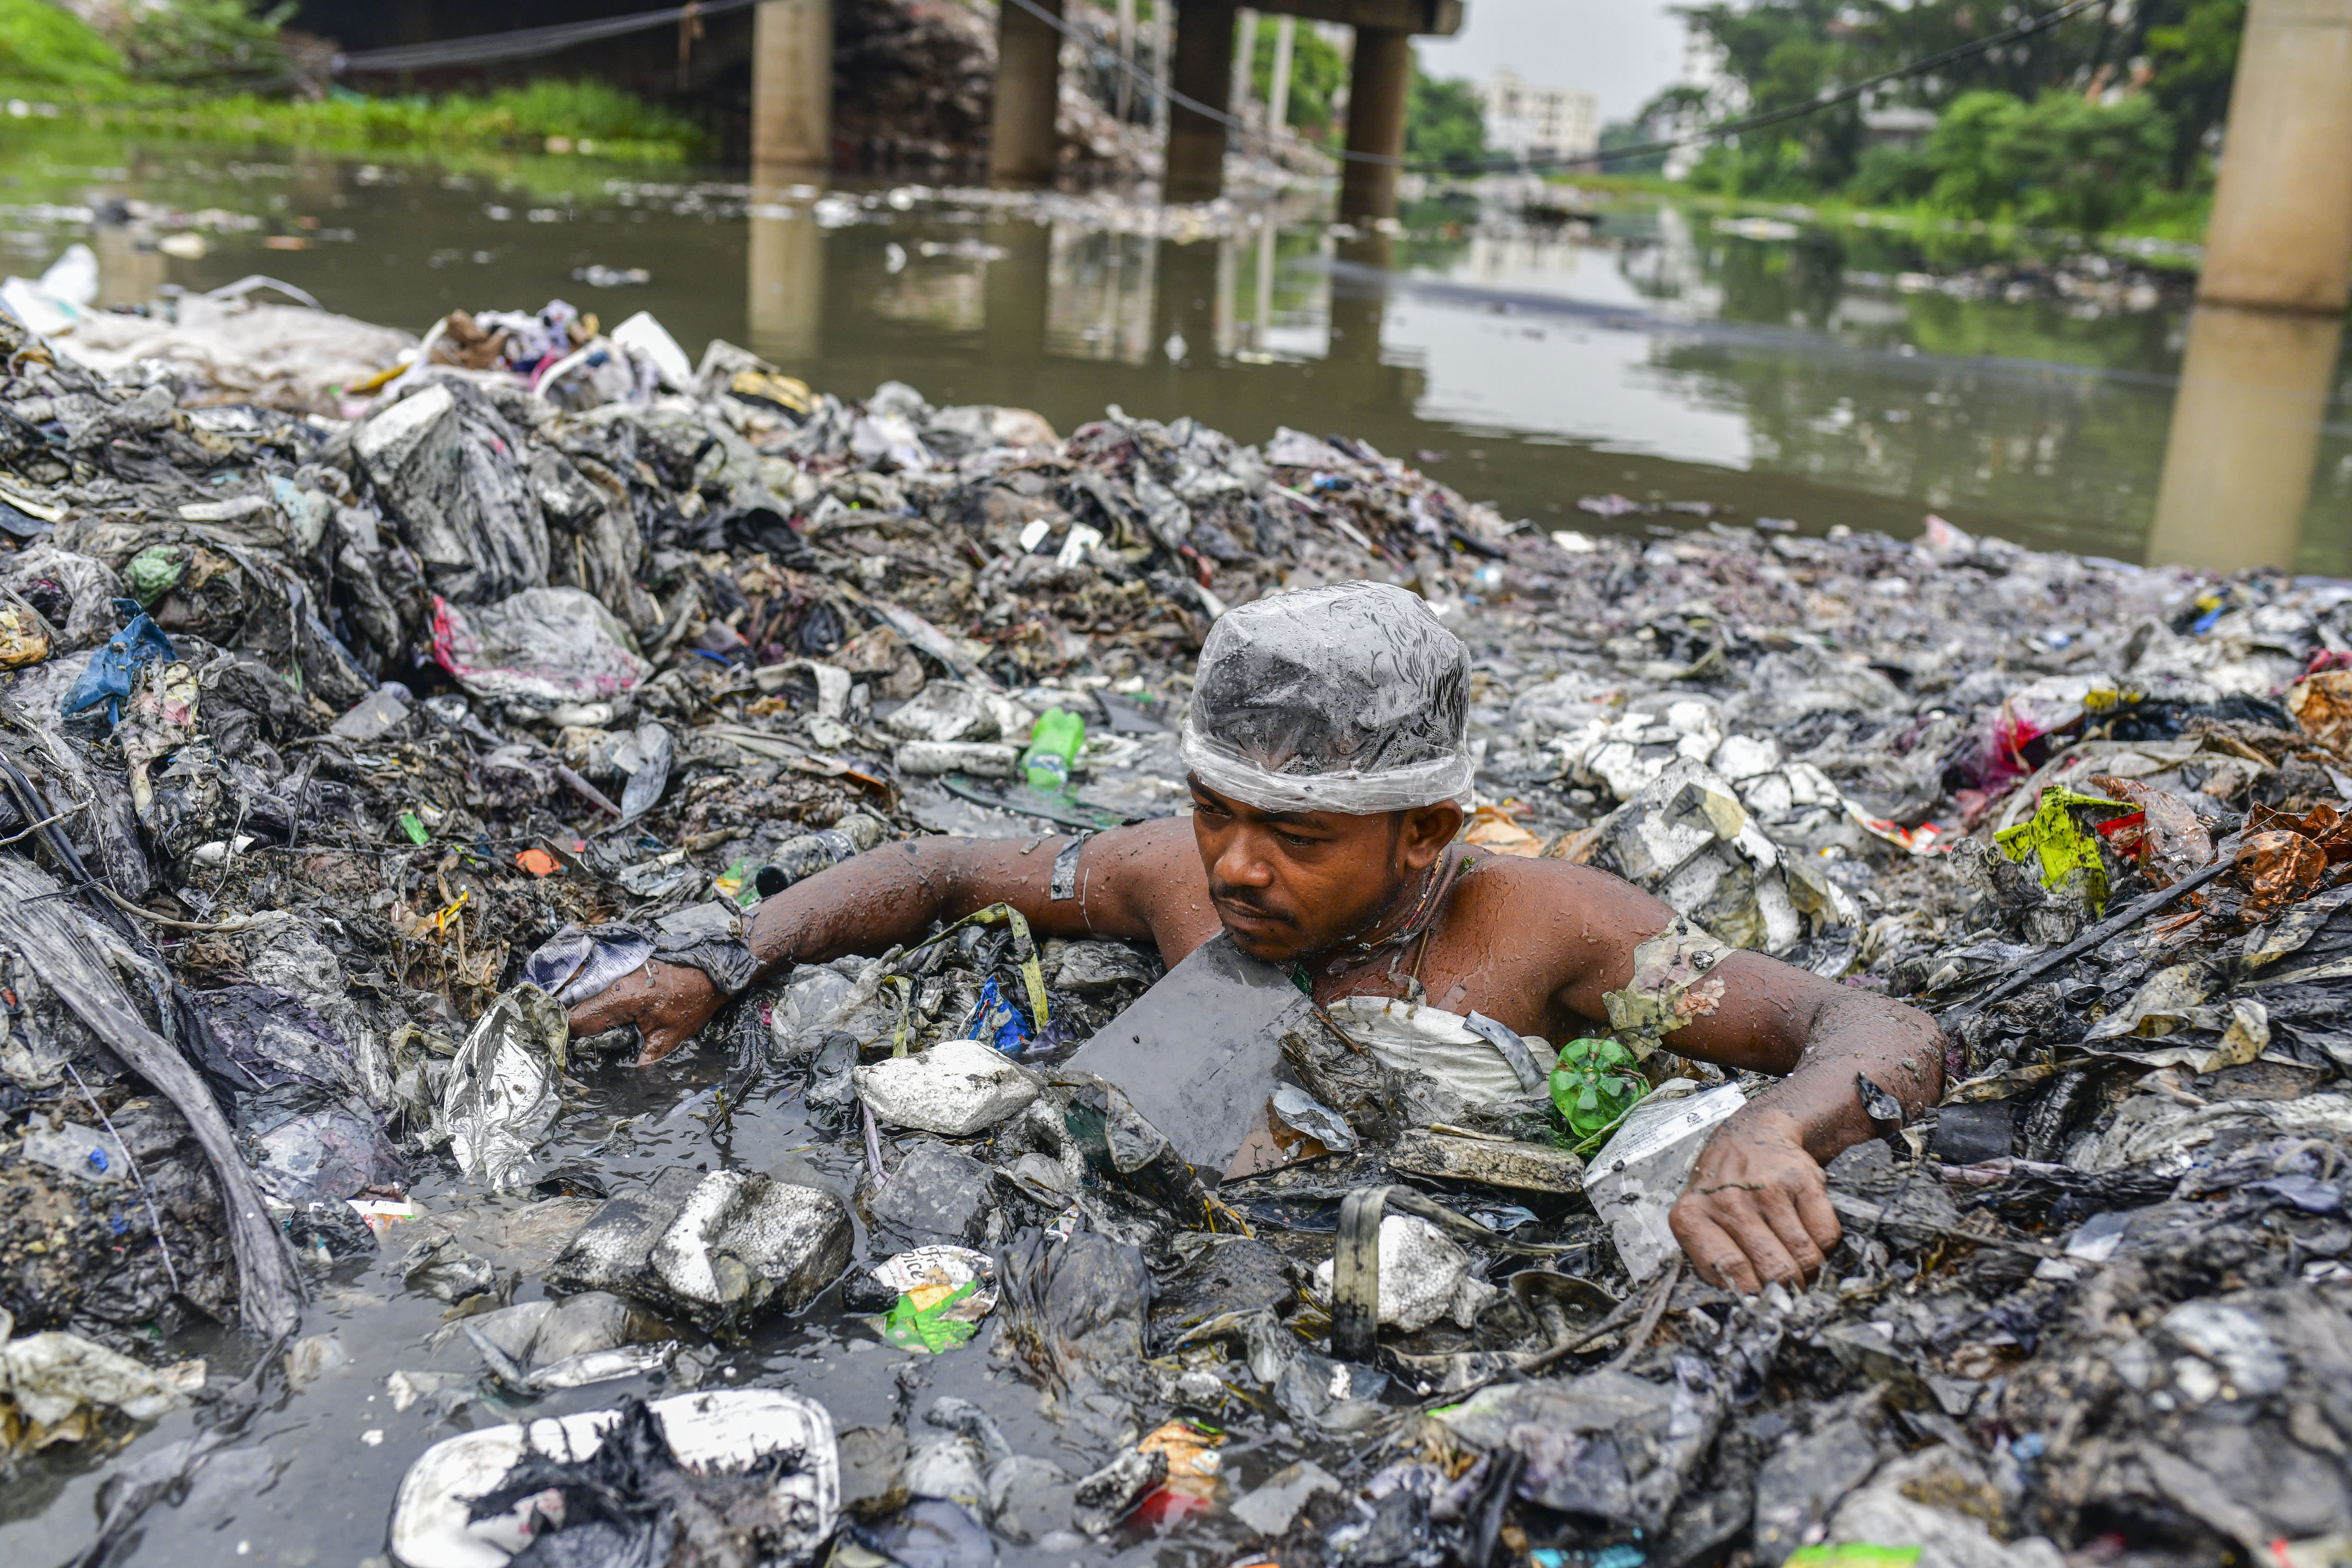 pollution due to waste accumulation